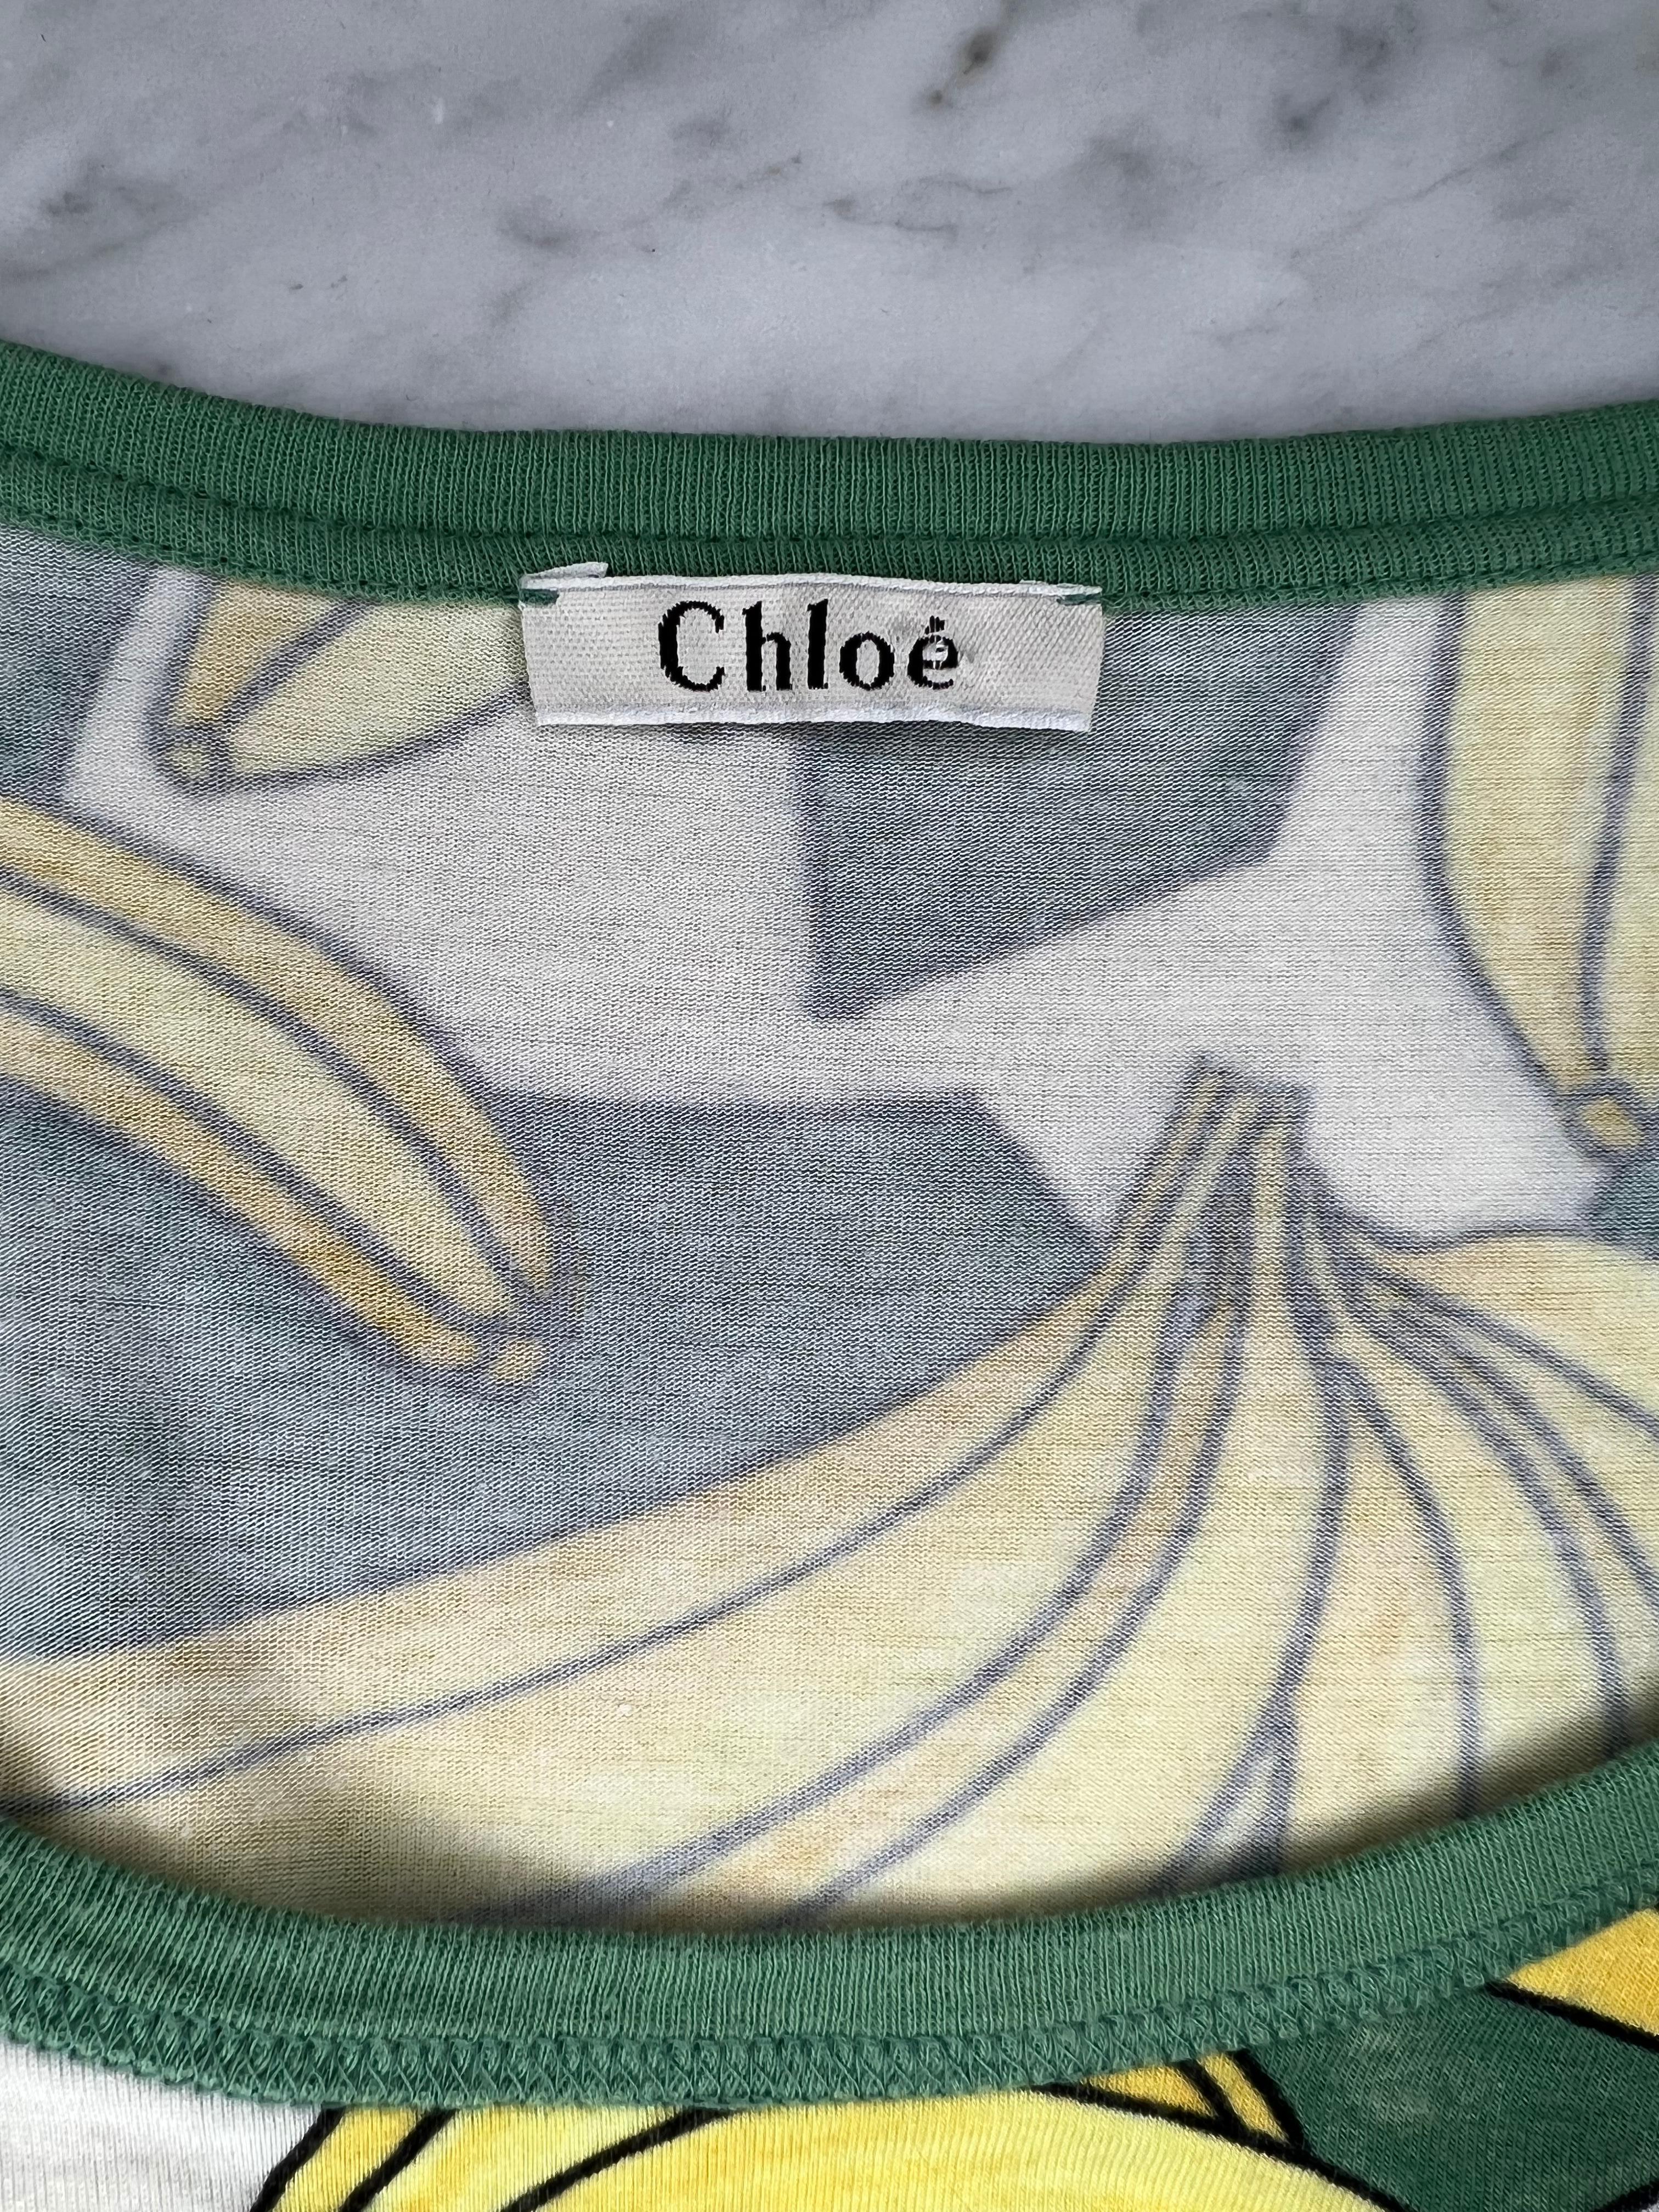 S/S 2004 Chloe by Phoebe Philo Banana Print Runway Documented Top 5